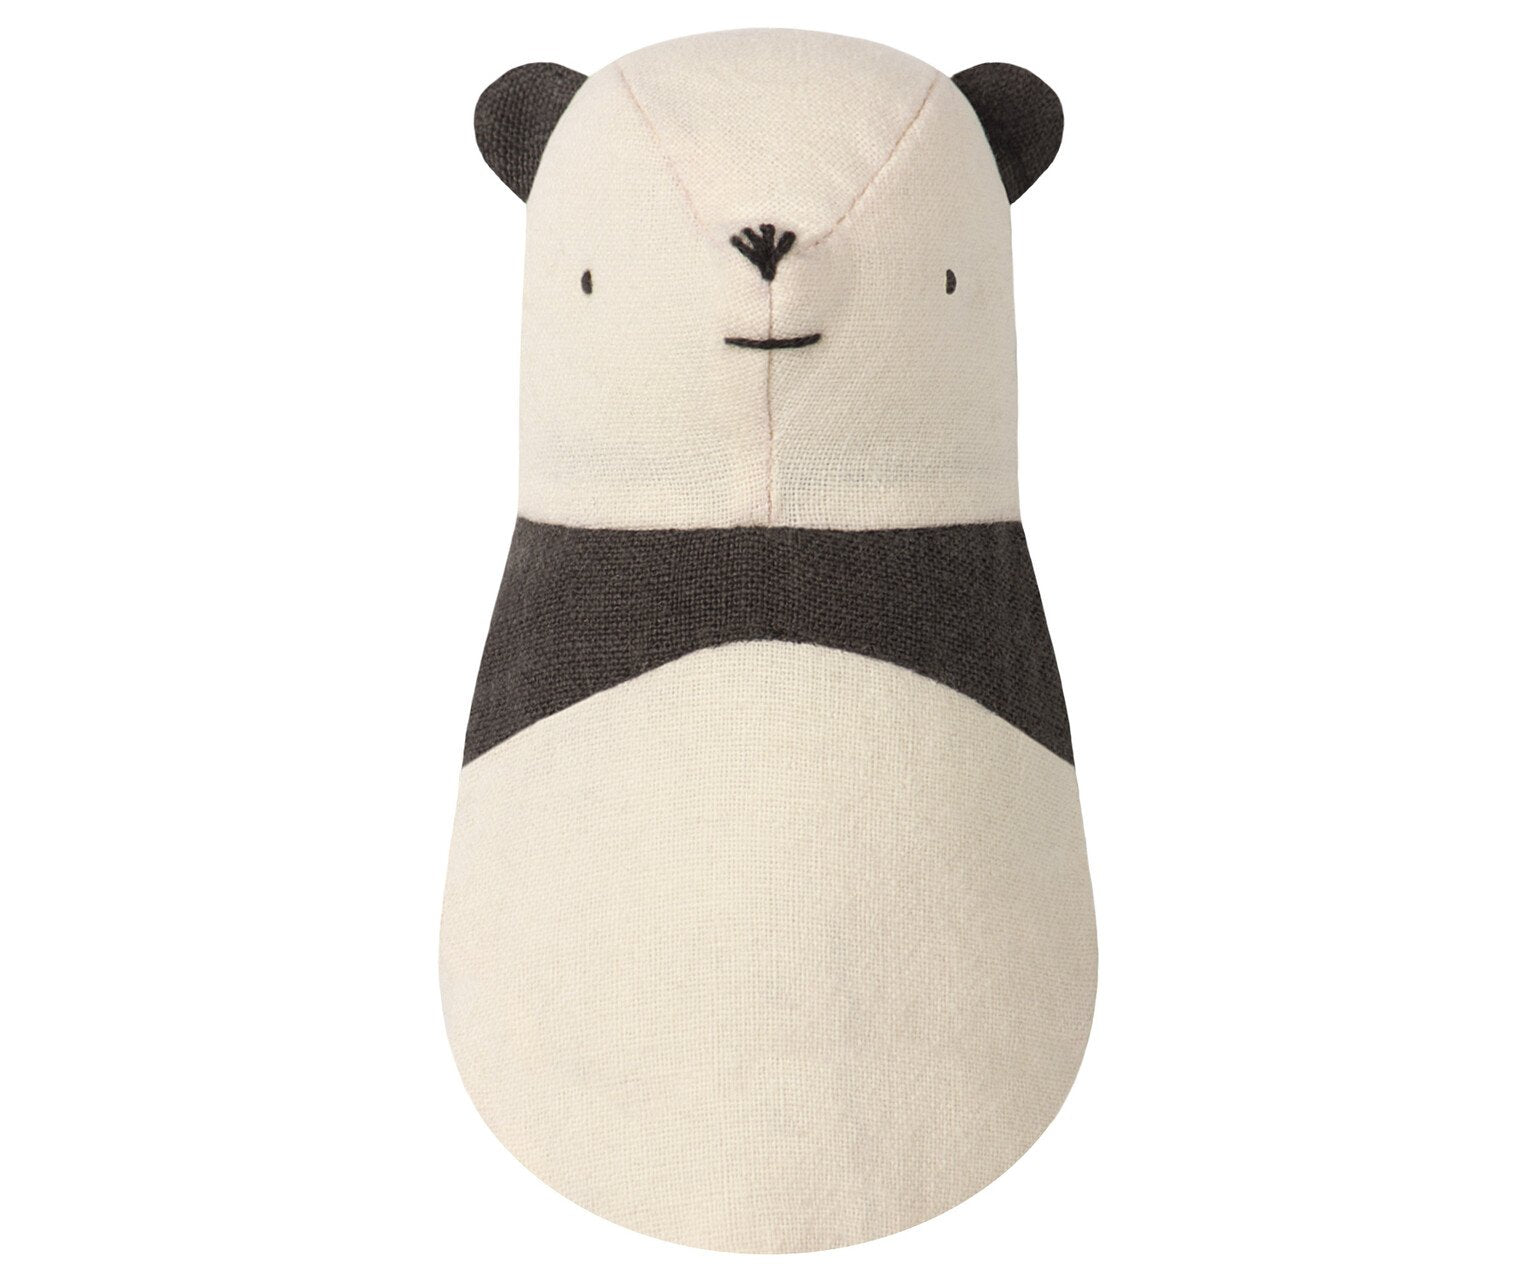 Noah's Friends: Panda Rattle